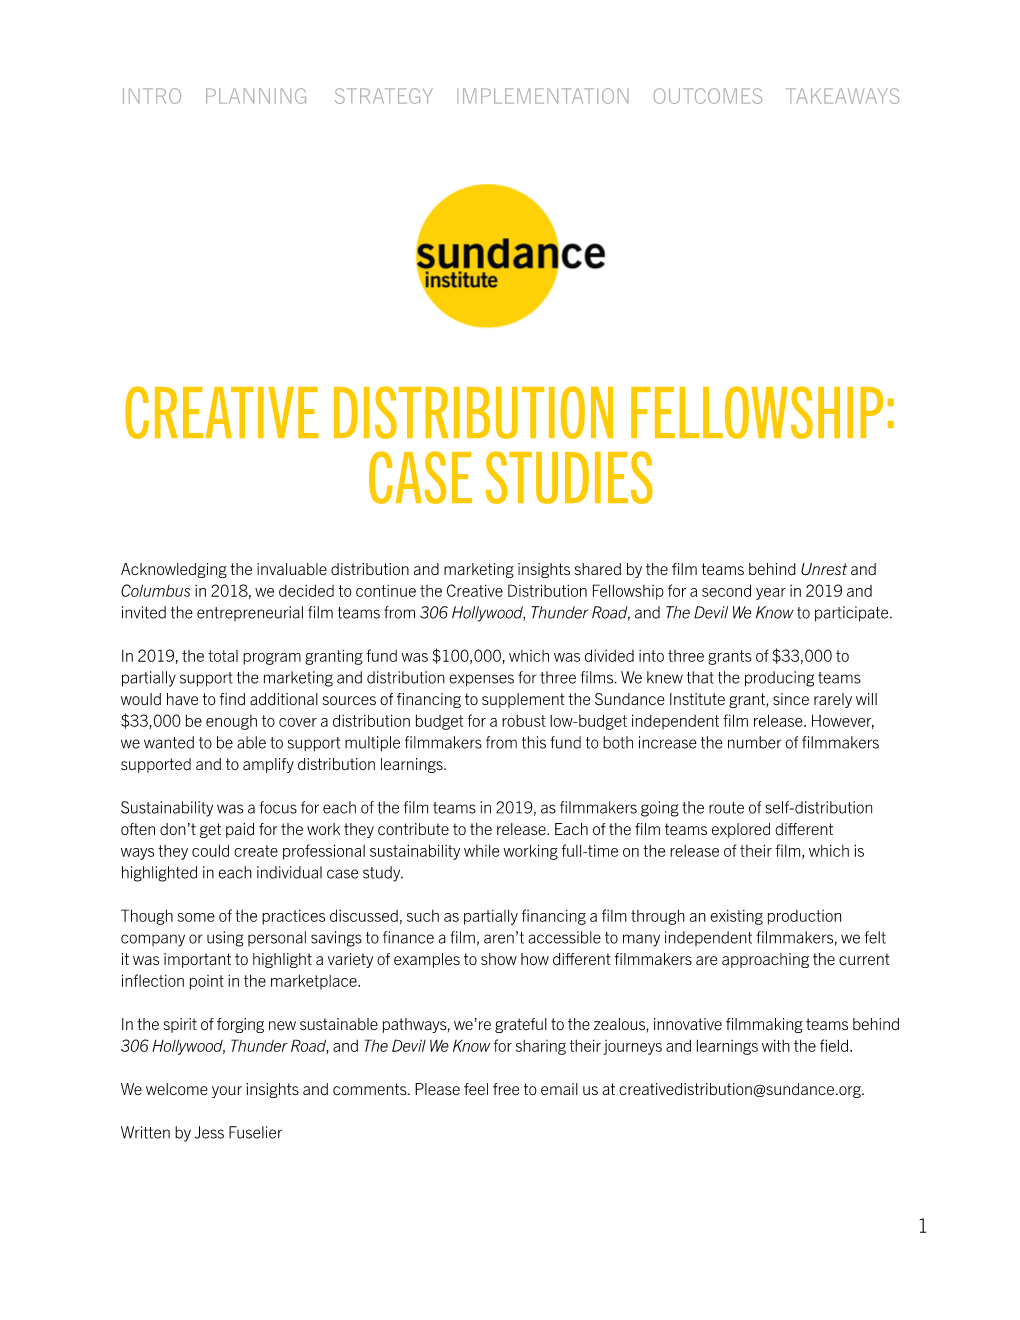 Creative Distribution Fellowship: Case Studies